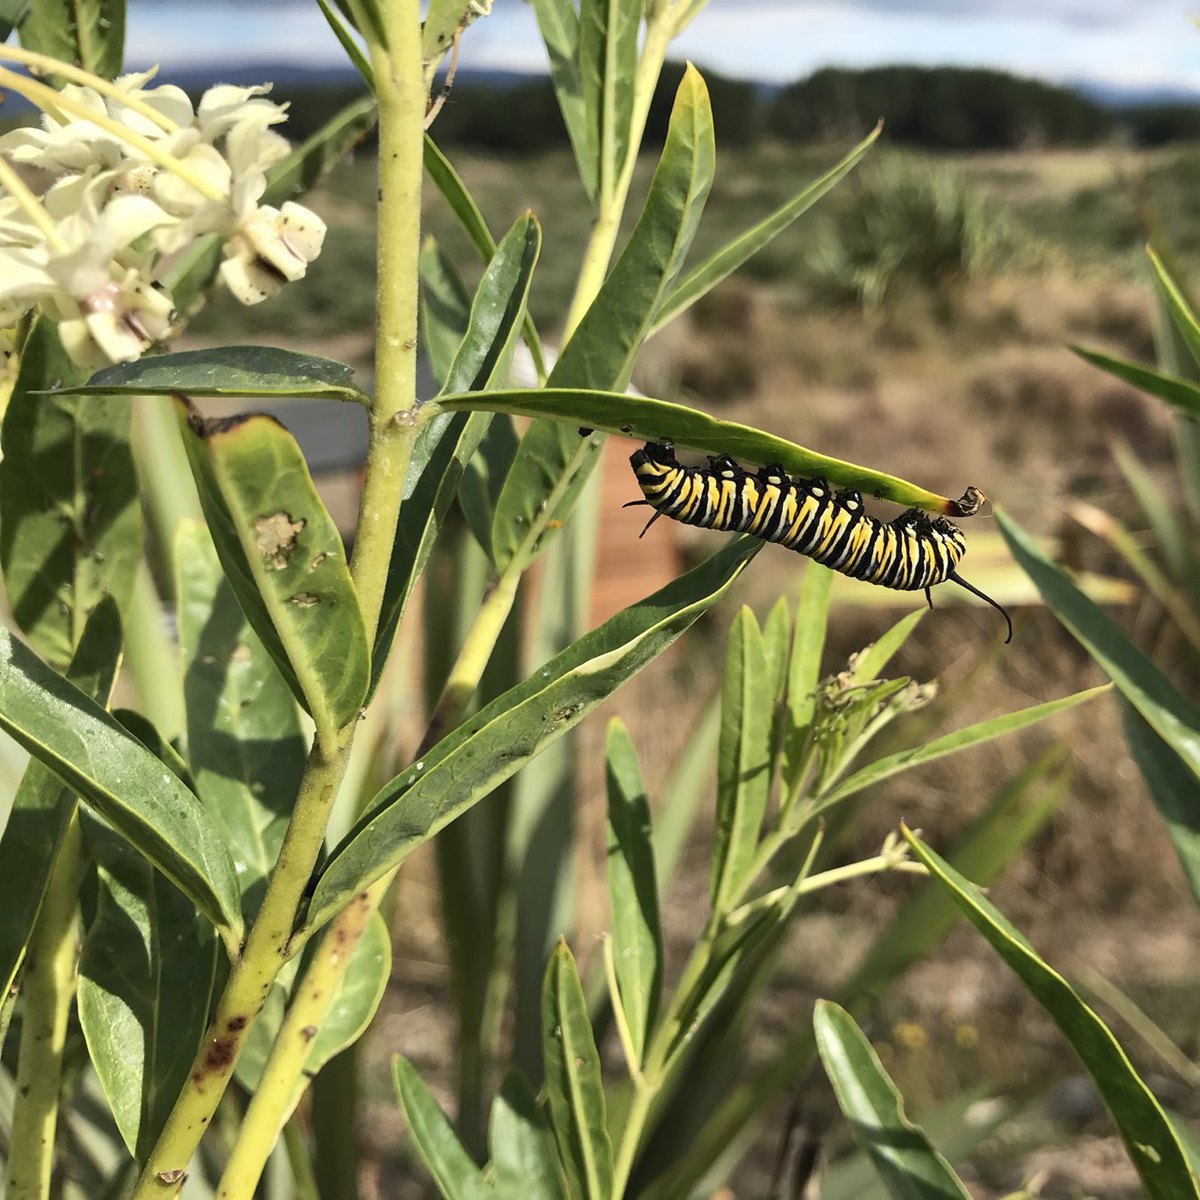 Closeup of a caterpillar on a plant. 